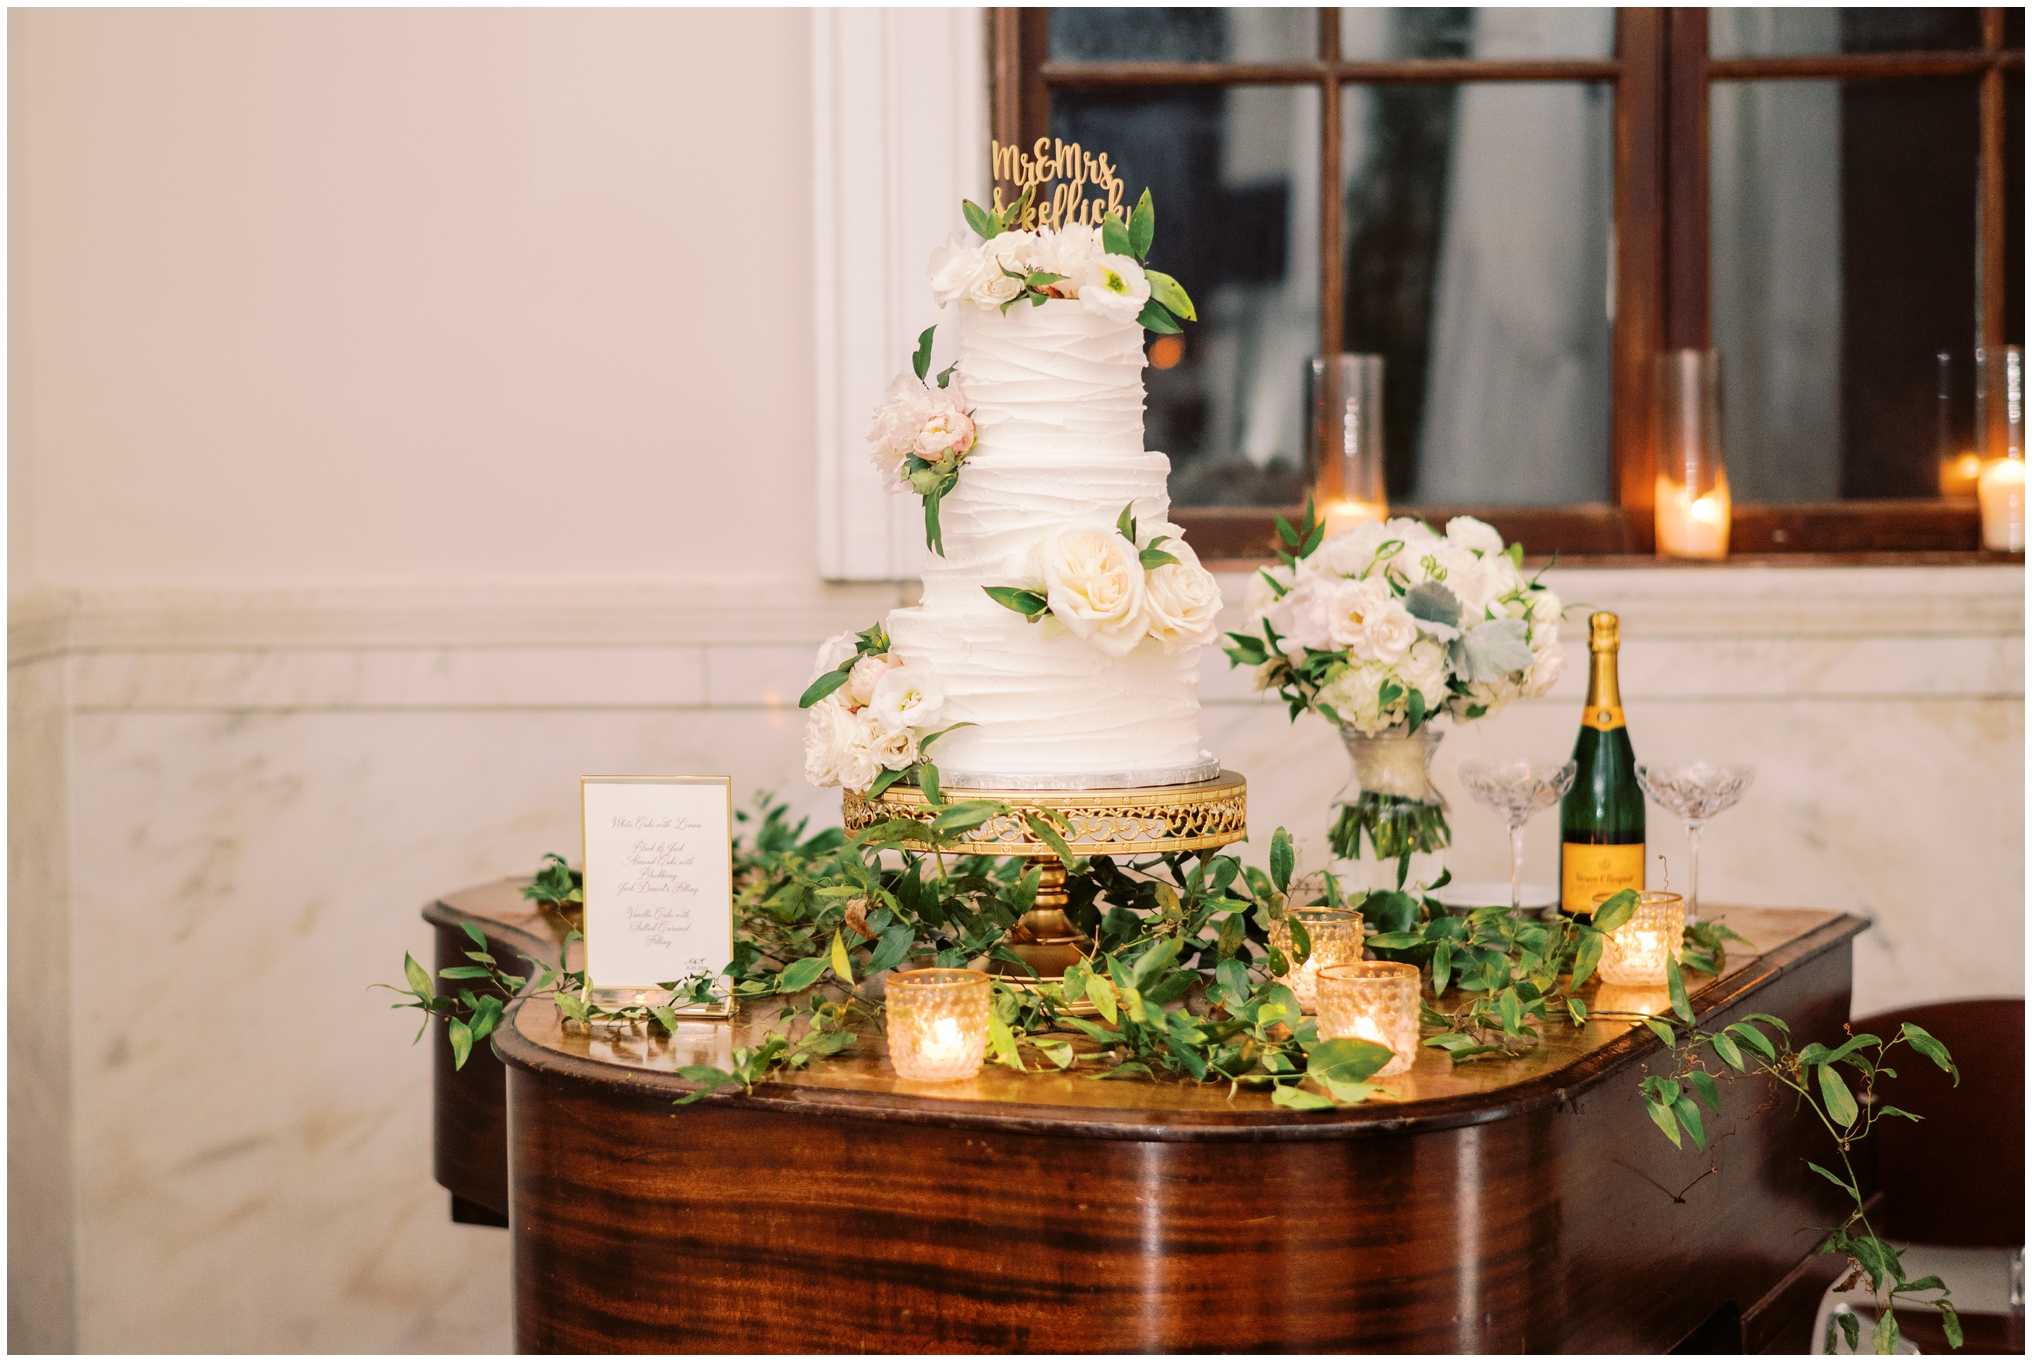 historic-decatur-courthouse-wedding-reception-cake